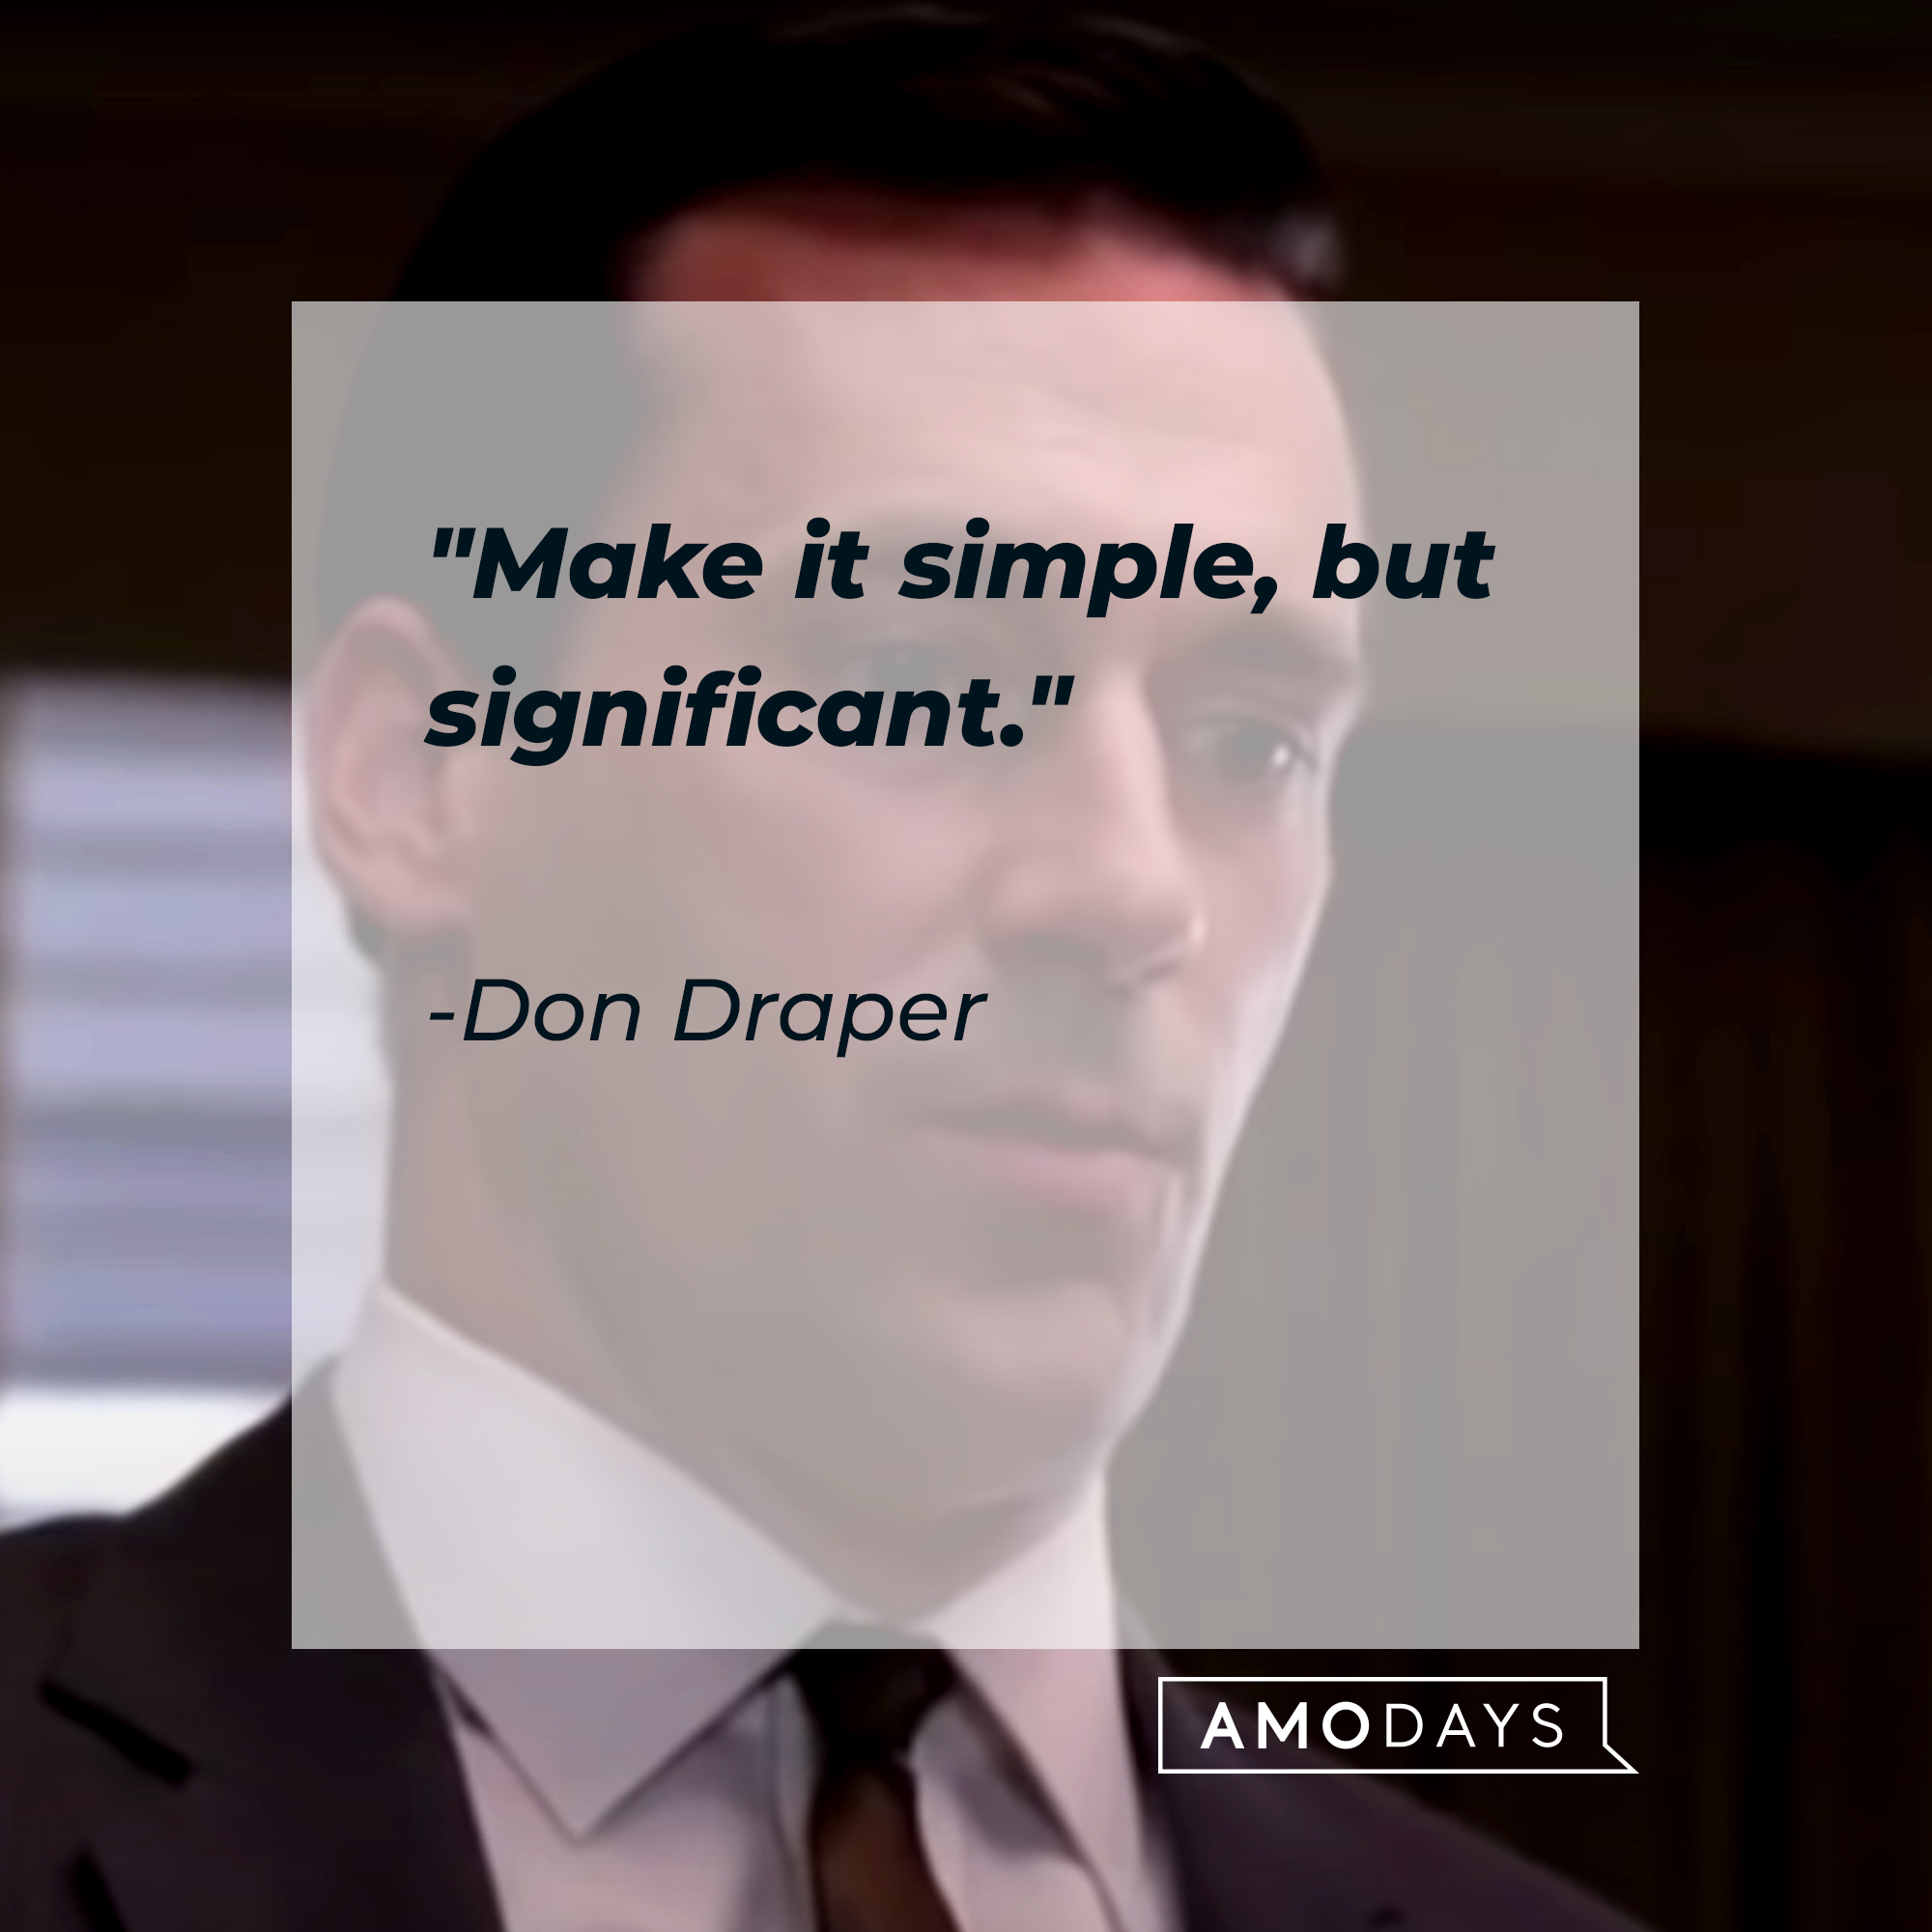 Don Draper's quote: "Make it simple, but significant." | Source: Facebook.com/MadMen